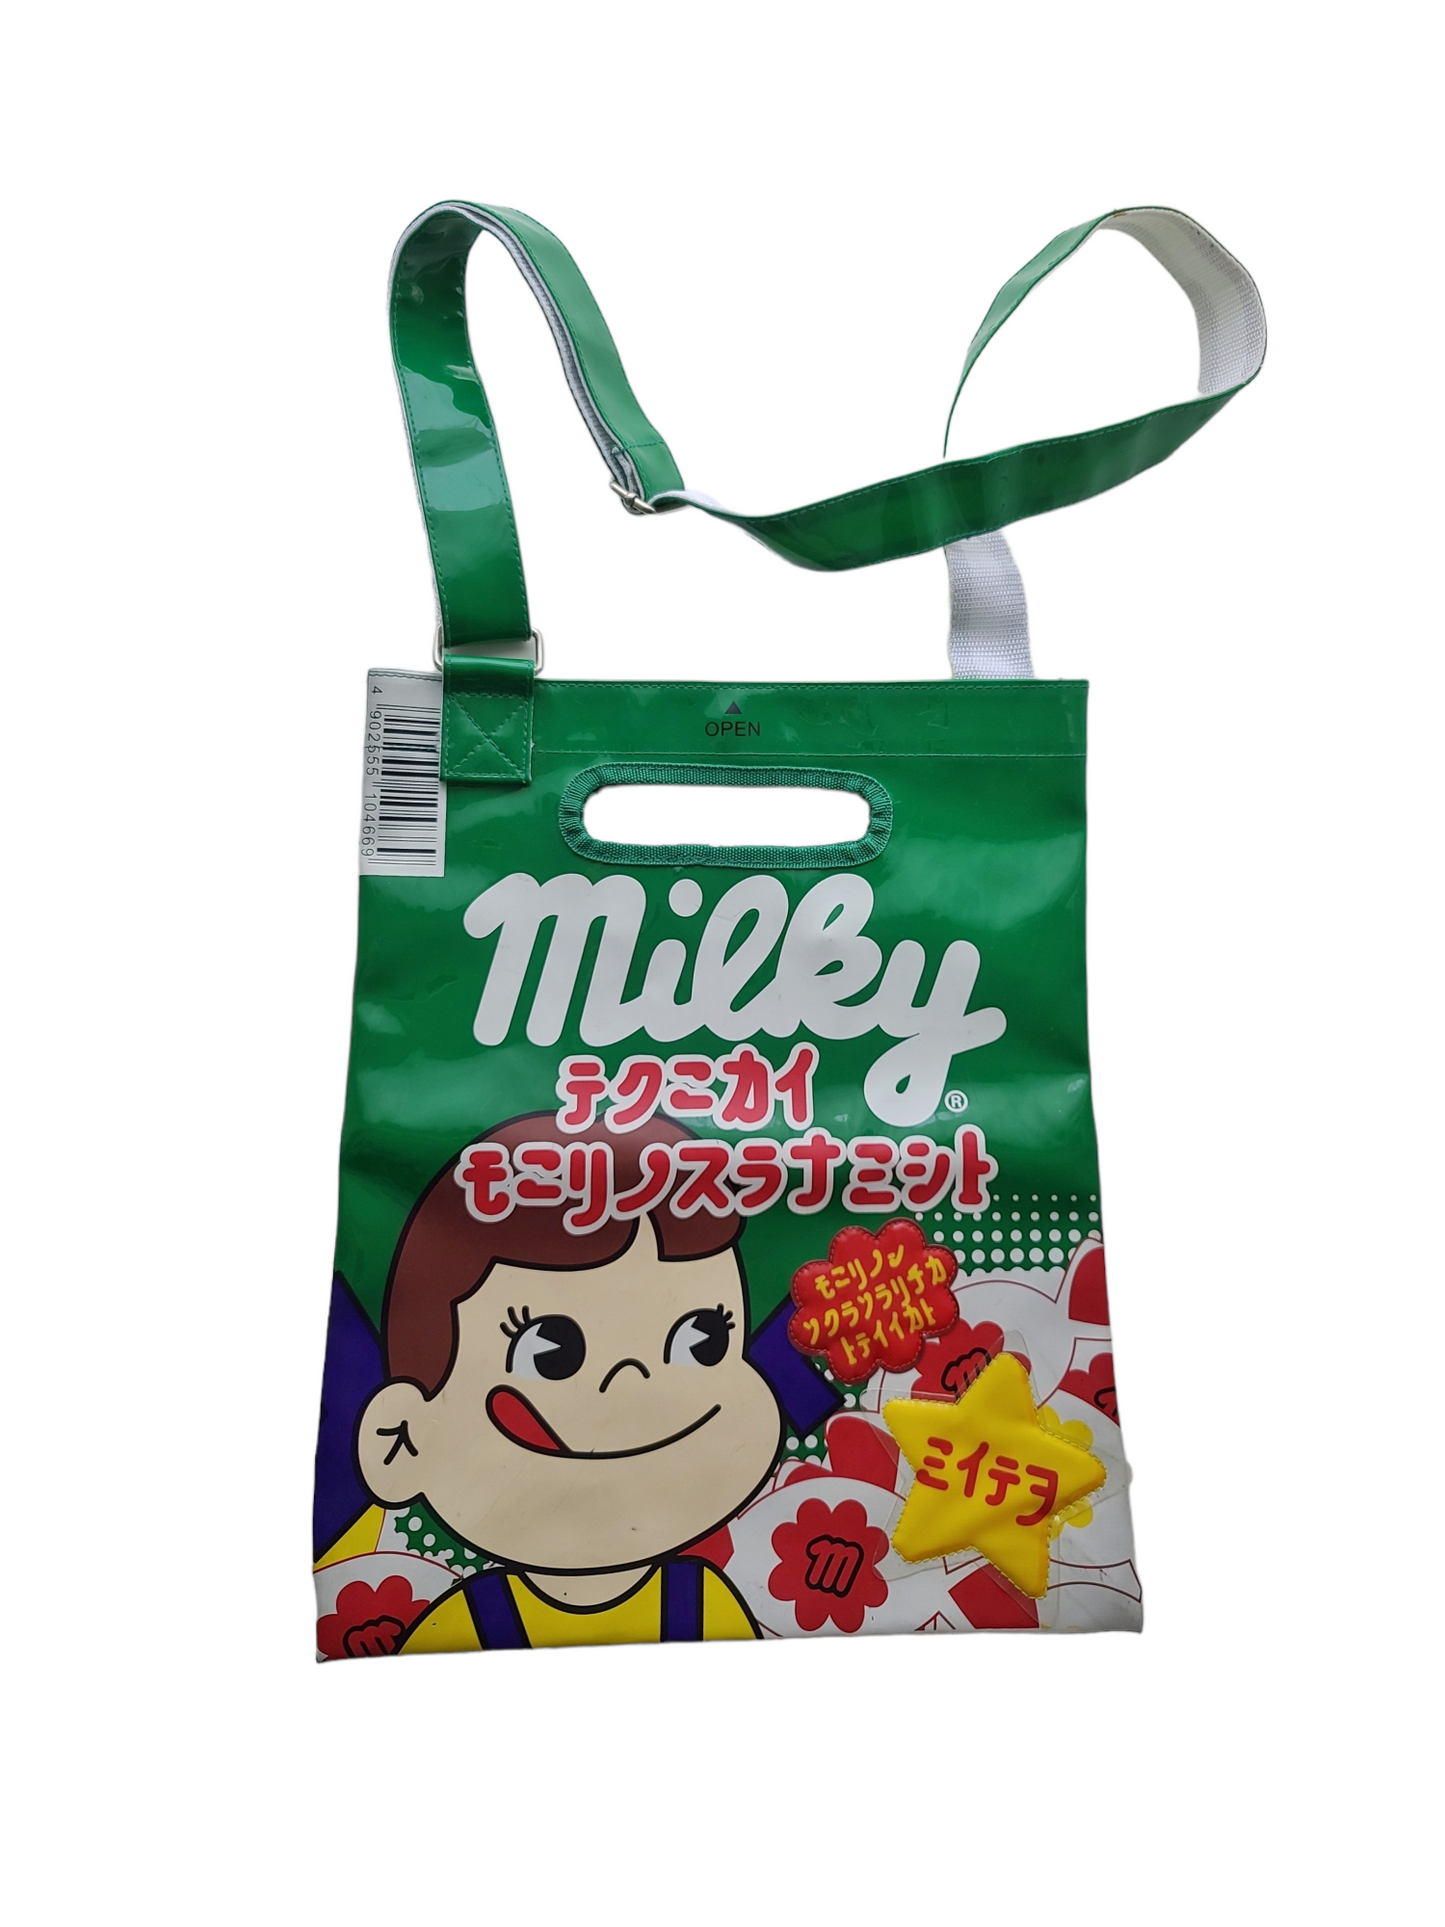 Peko chan archive vintage bag japan harajuku 90s milky